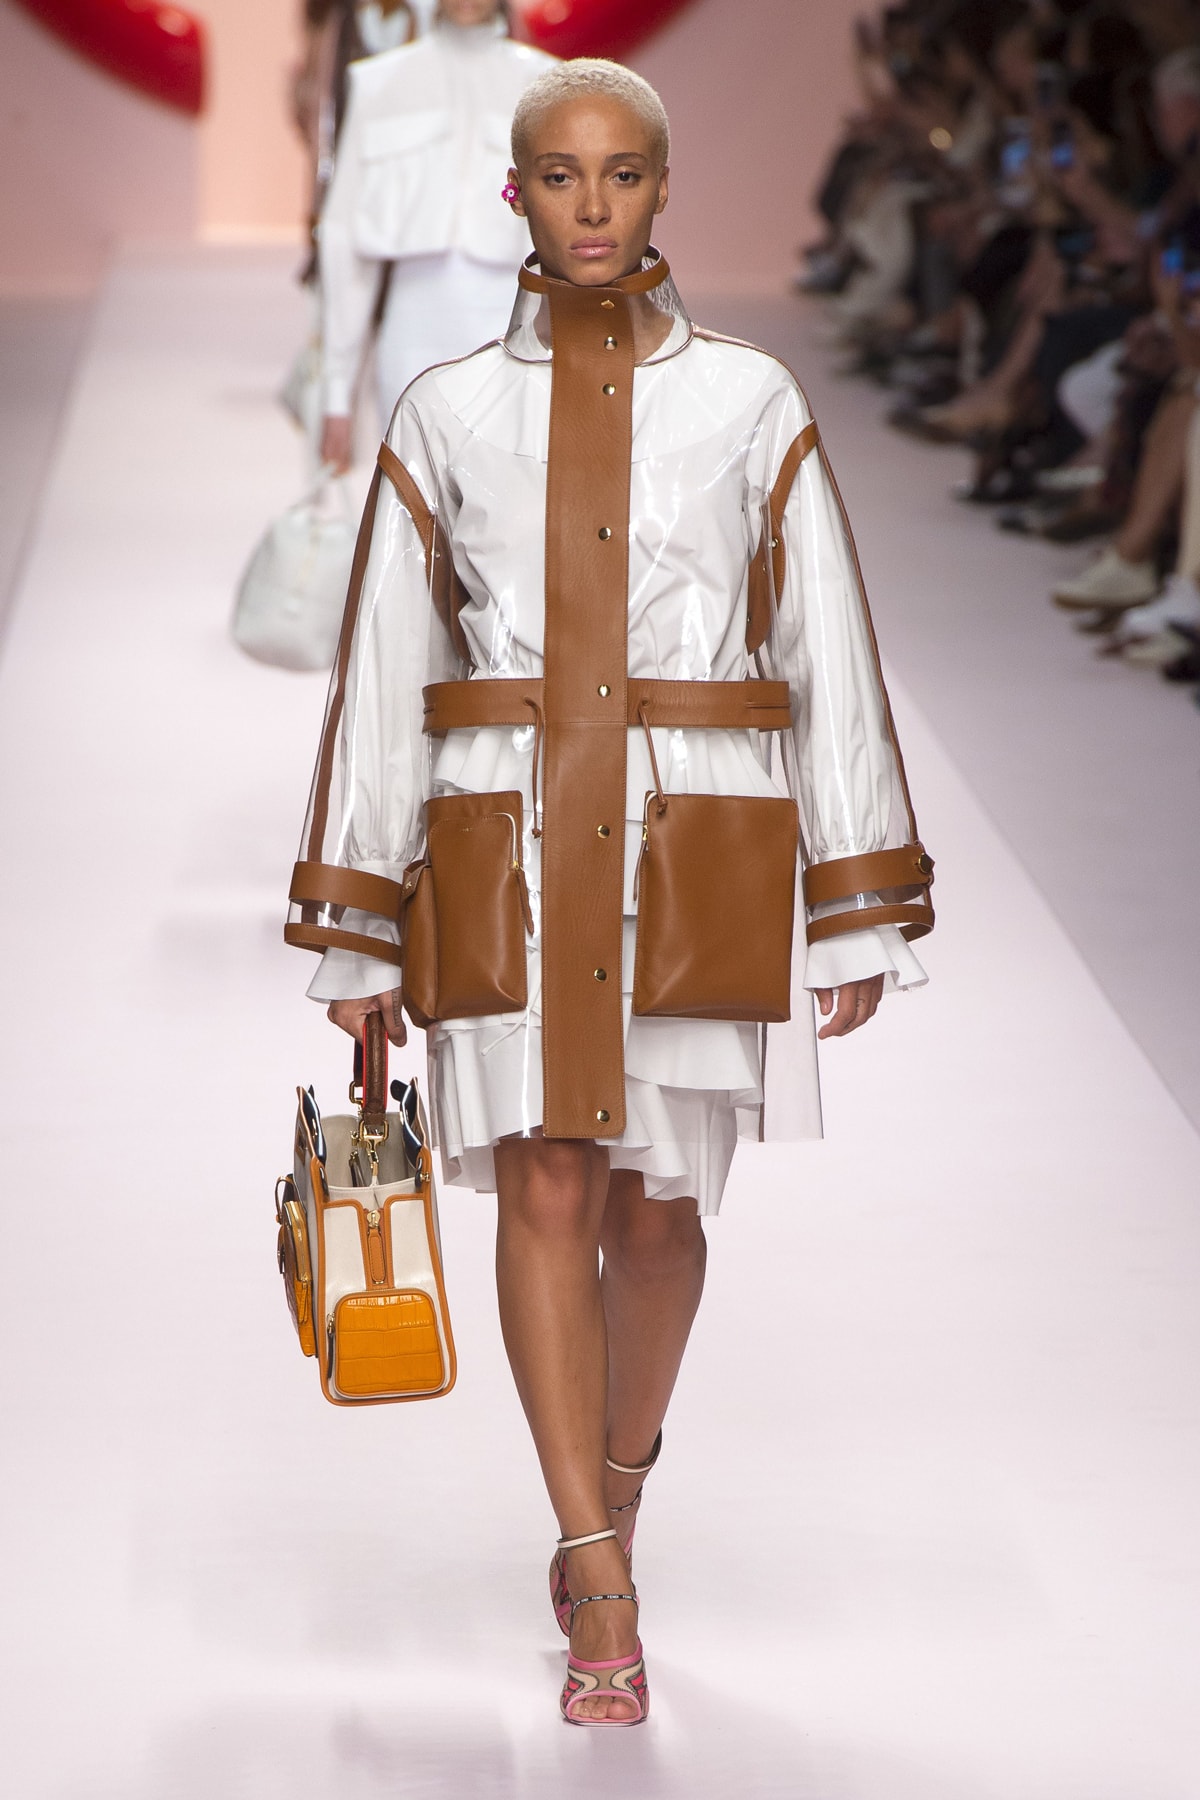 Fendi Karl Lagerfeld Spring Summer 2019 Milan Fashion Week Show Collection Adwoa Aboah Jacket White Brown